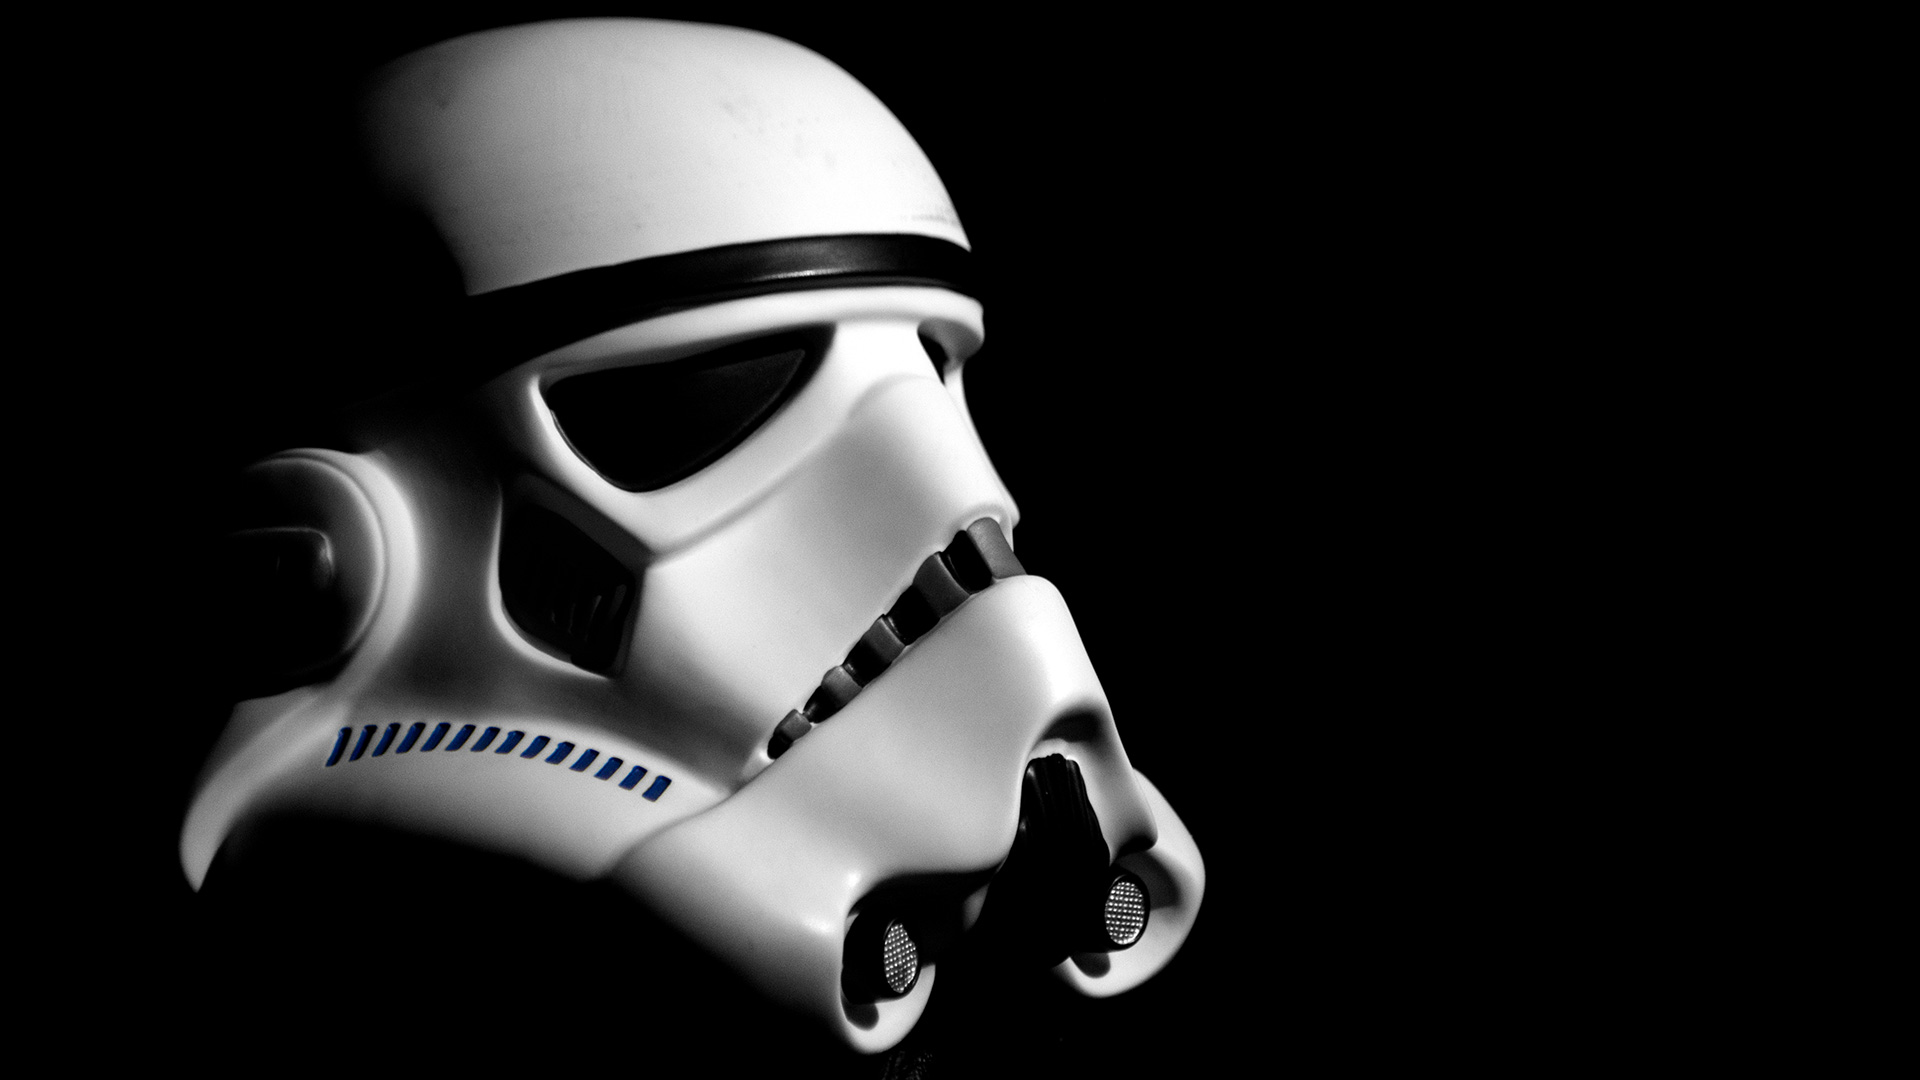 Star Wars Stormtrooper helmet